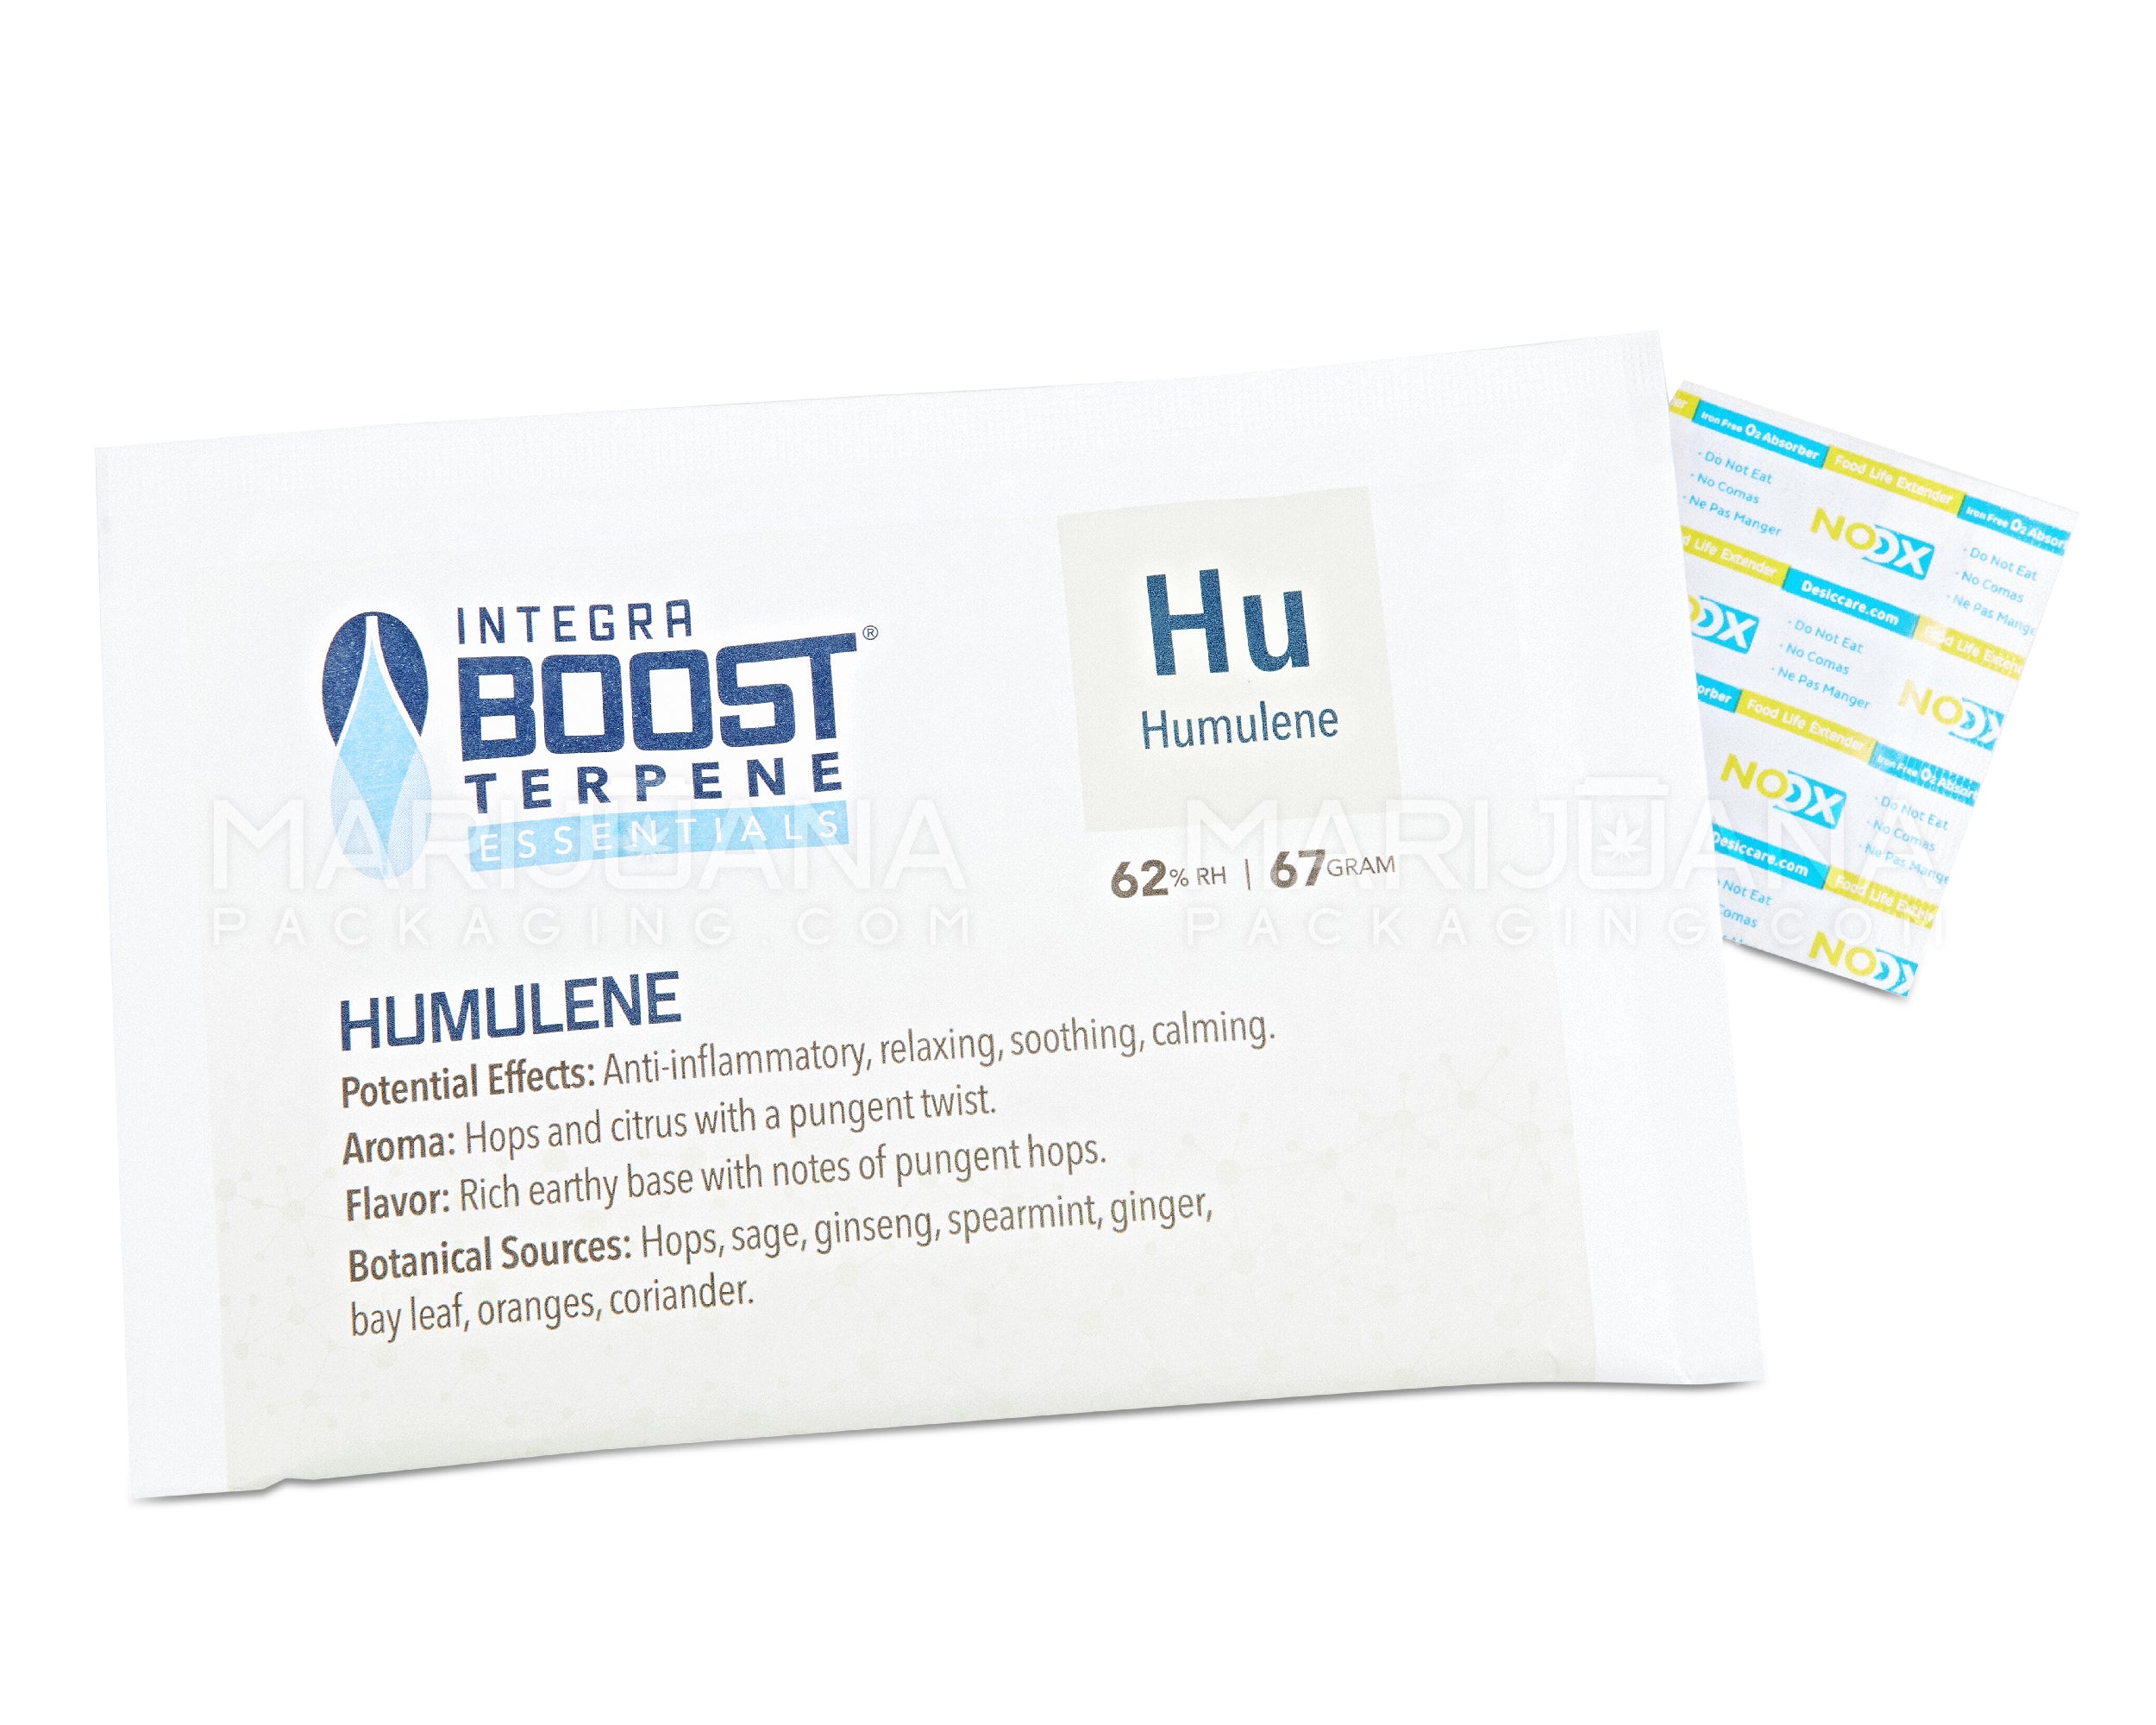 INTEGRA | 'Retail Display' Boost Terpene Essentials Humulene Humidity Pack | 67 Grams - 62% - 12 Count - 4